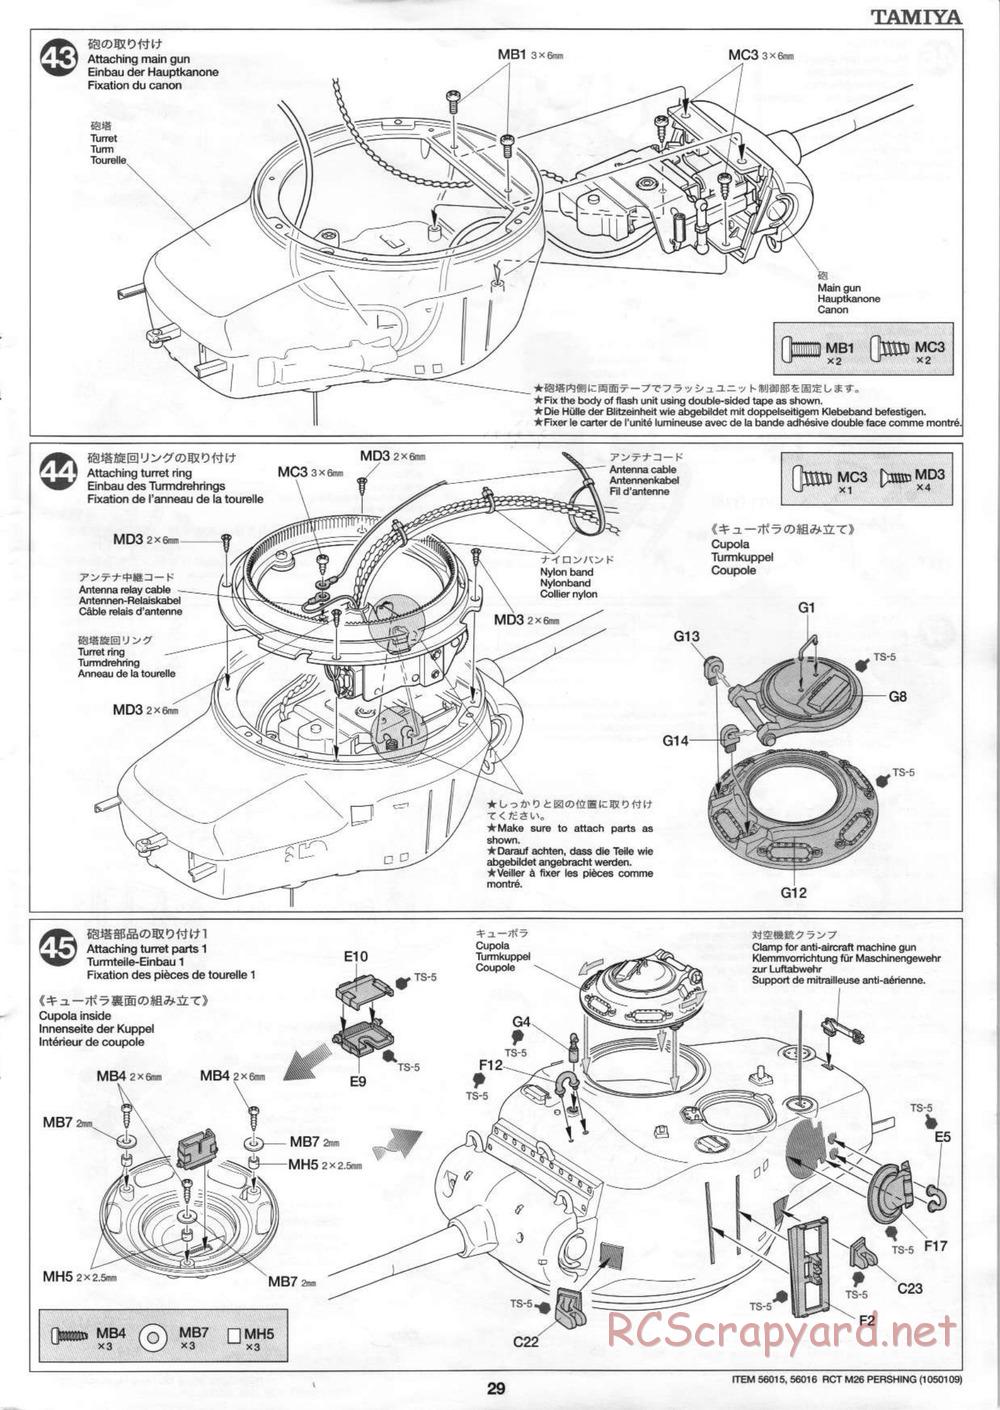 Tamiya - M26 Pershing - 1/16 Scale Chassis - Manual - Page 29